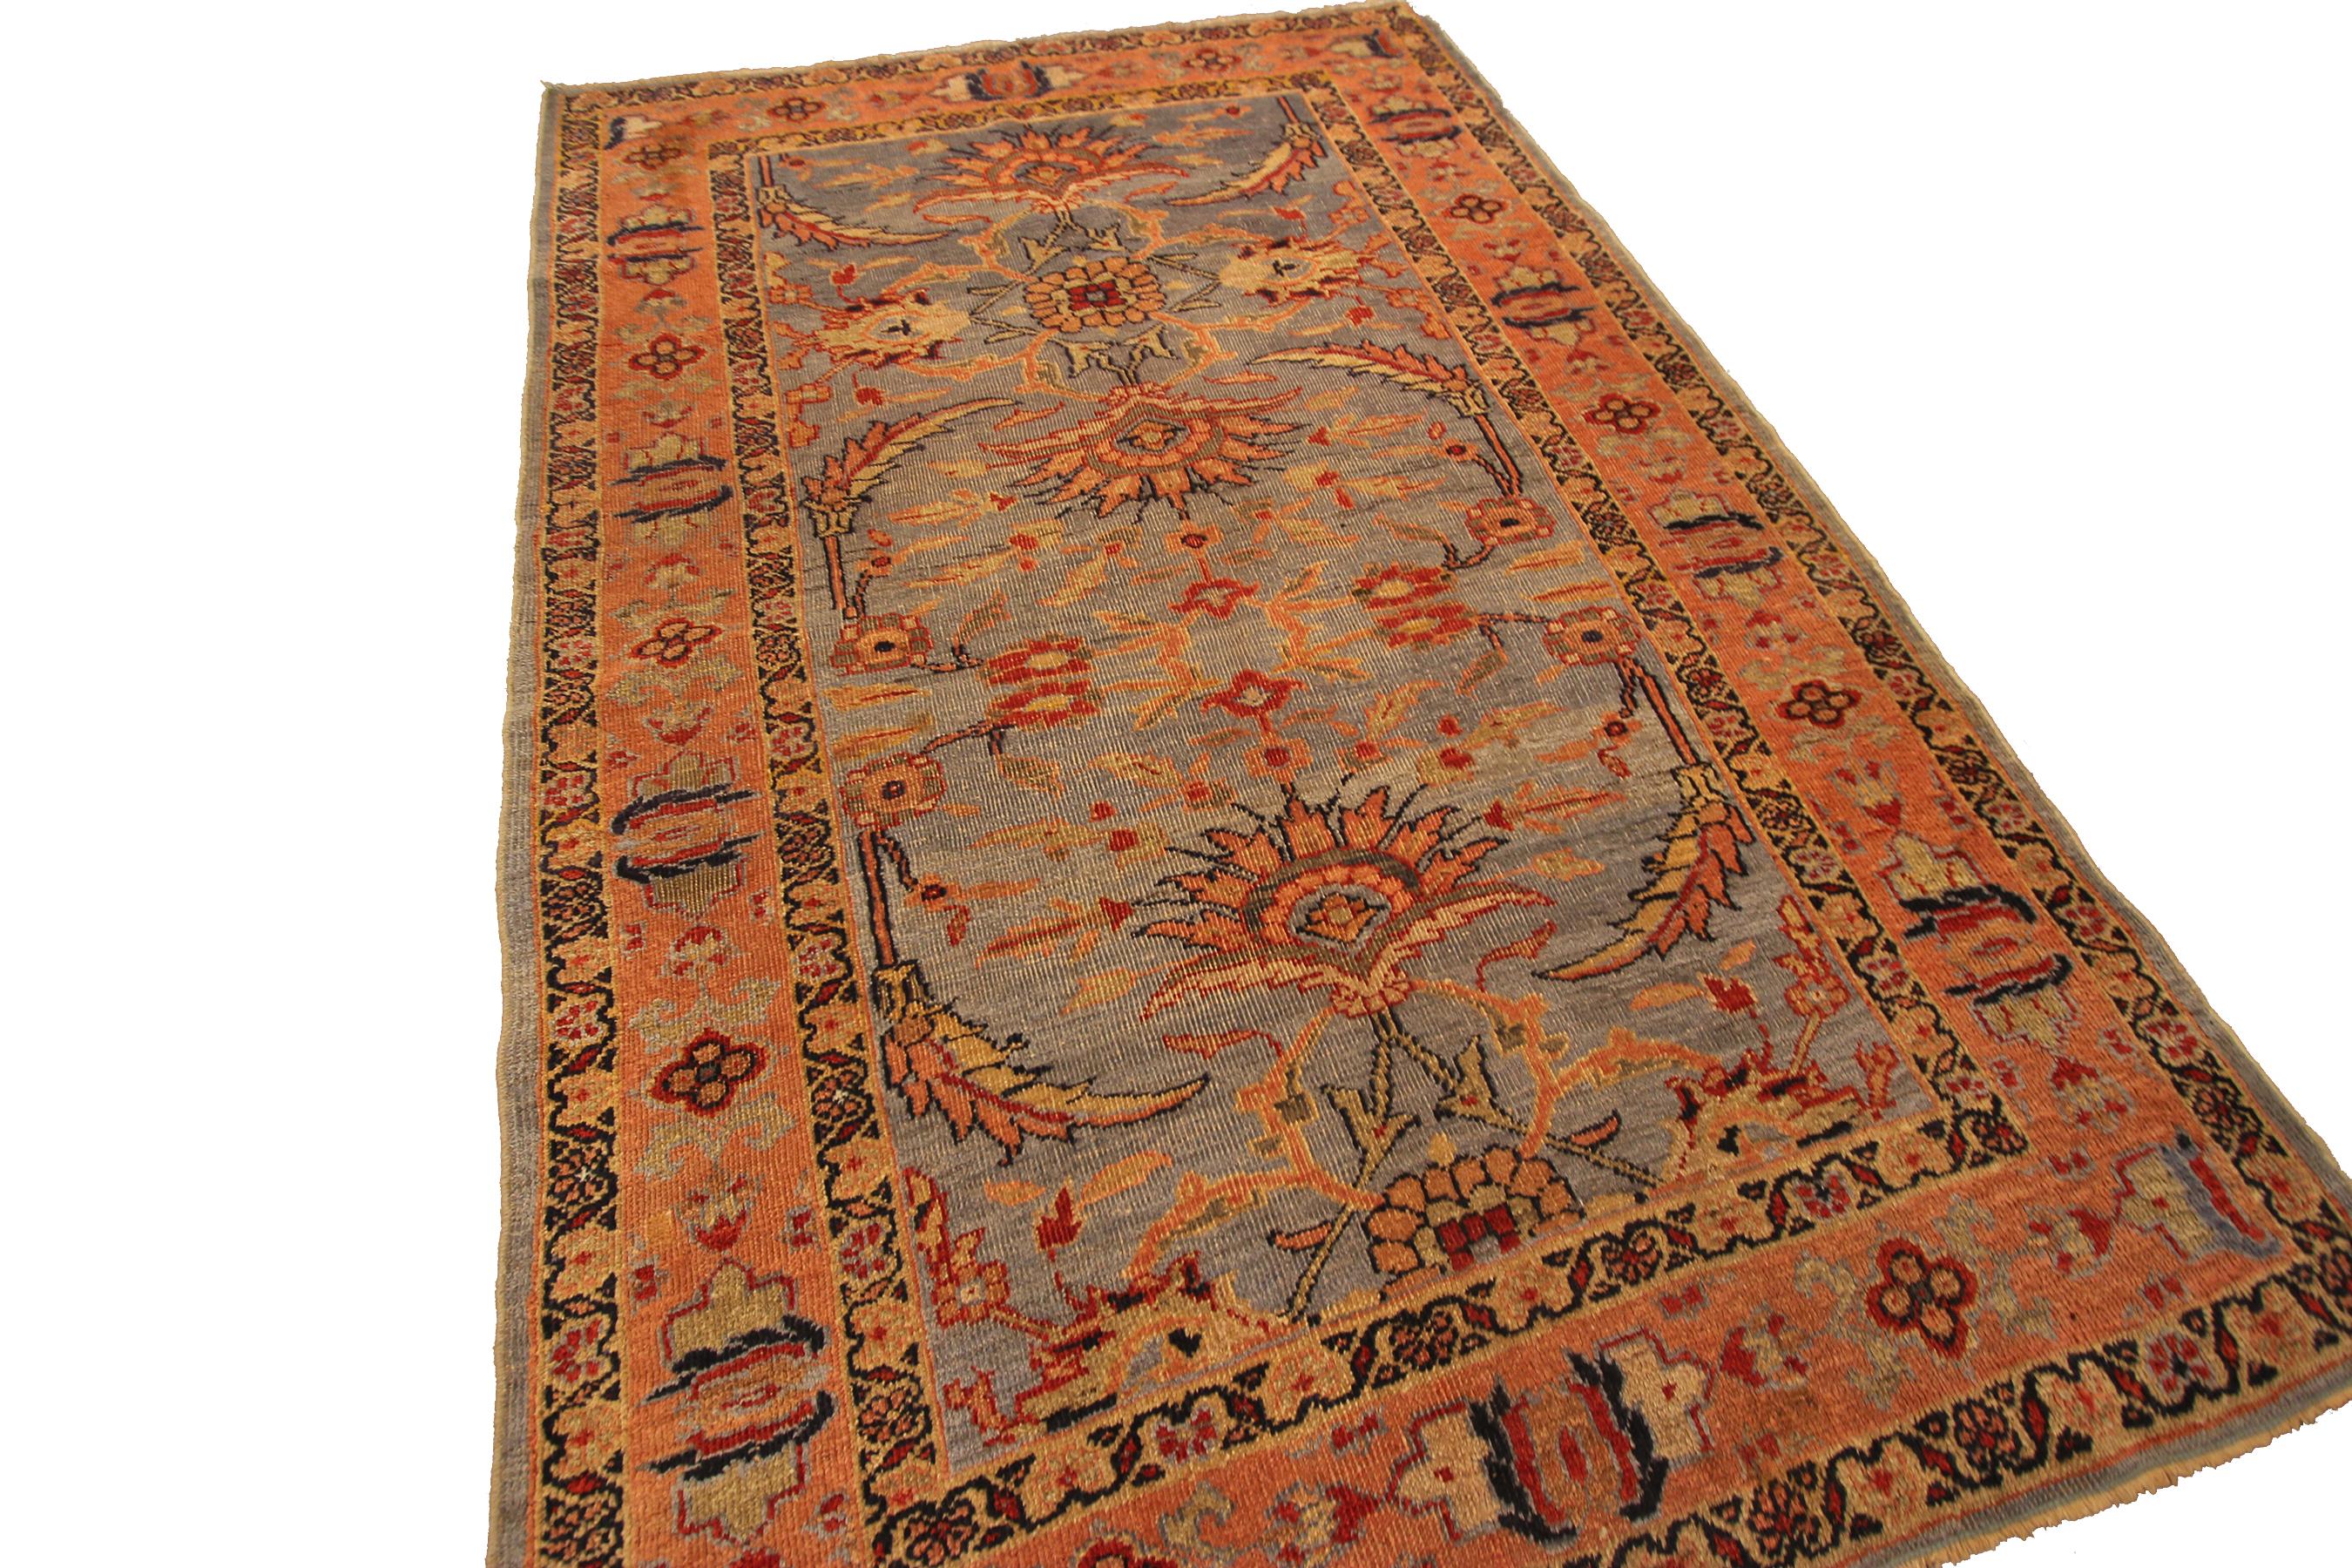 Rare Antique Mahal rug Sultanabad Zigler rug blue
4'5